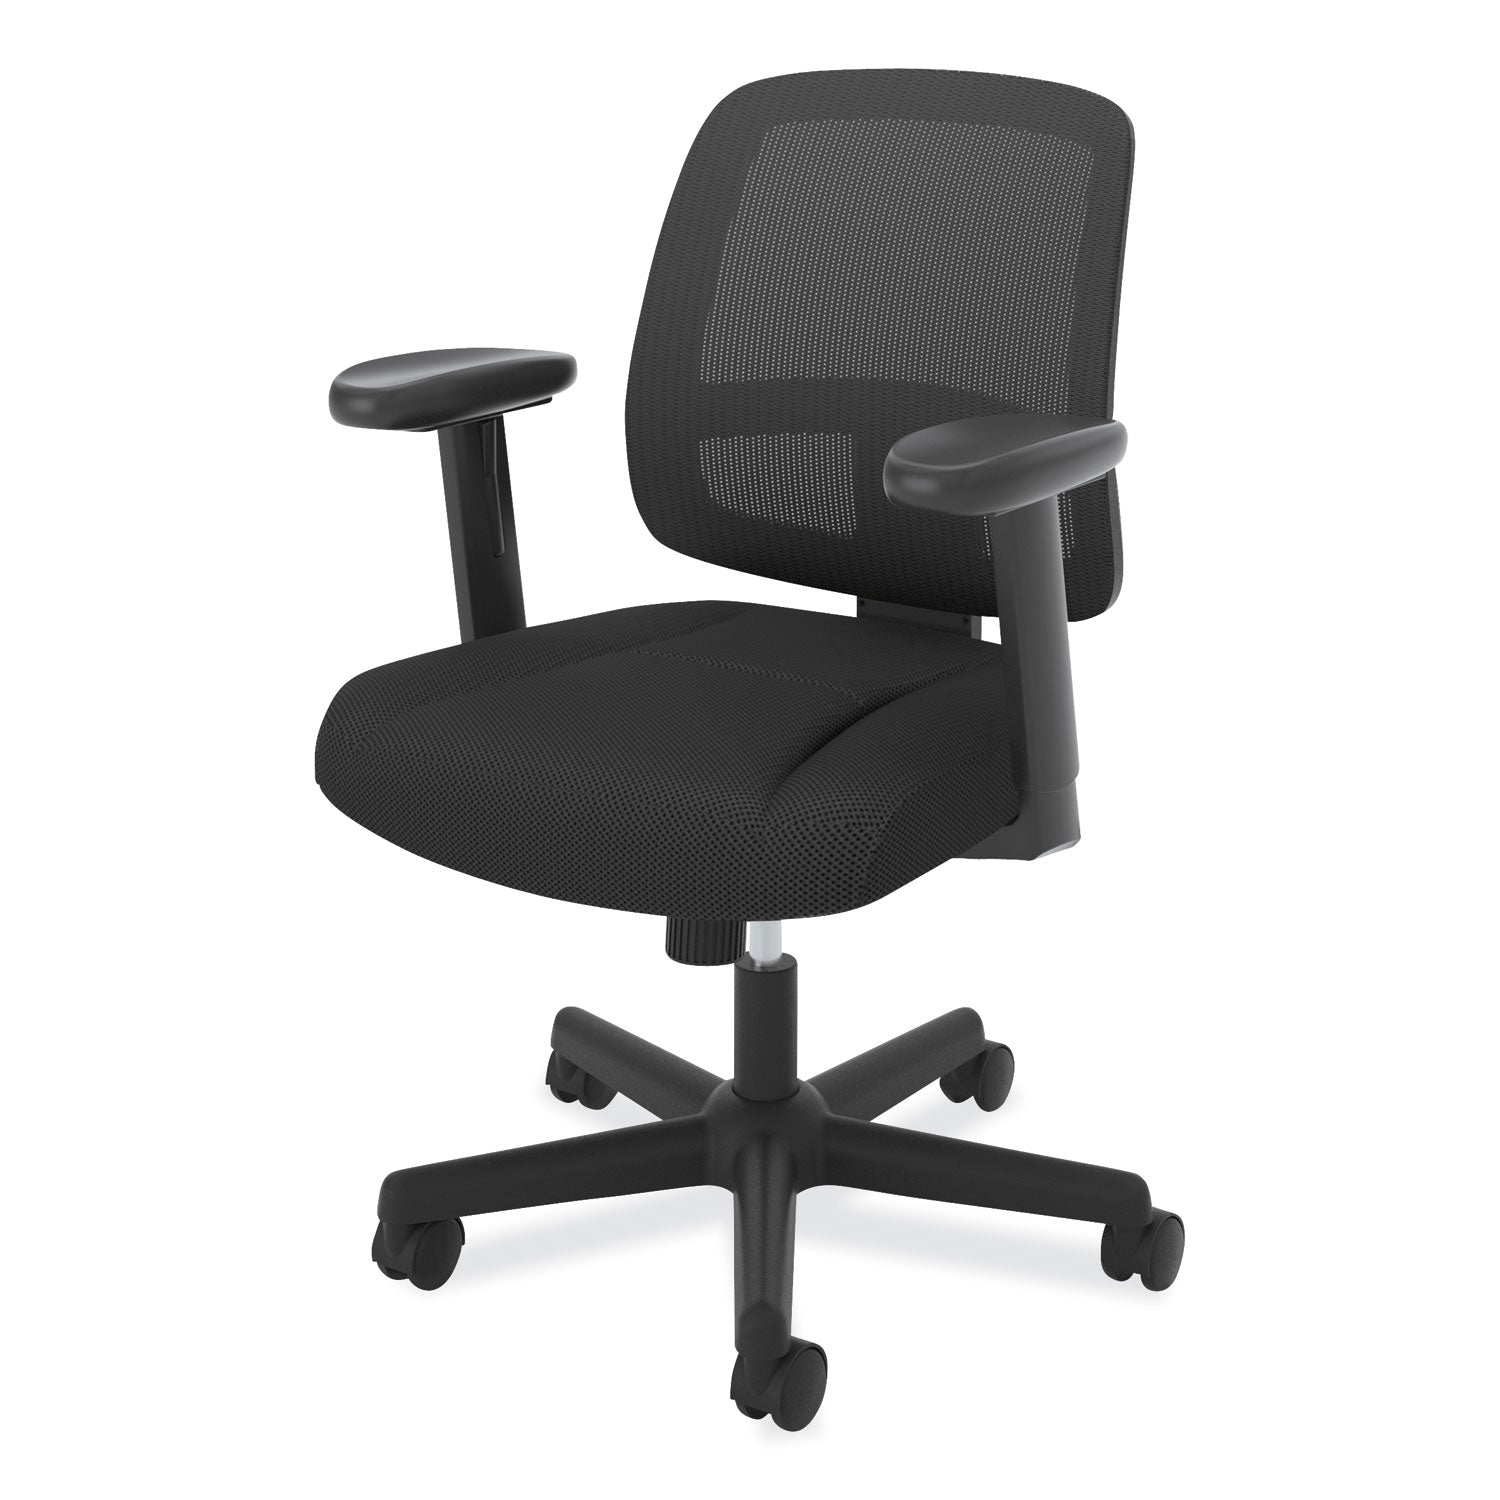 valutask-height-adjustable-arm-kit-for-hon-valutask-chairs-4-x-1025-x-1188-black-2-set_bsxvl995 - 2